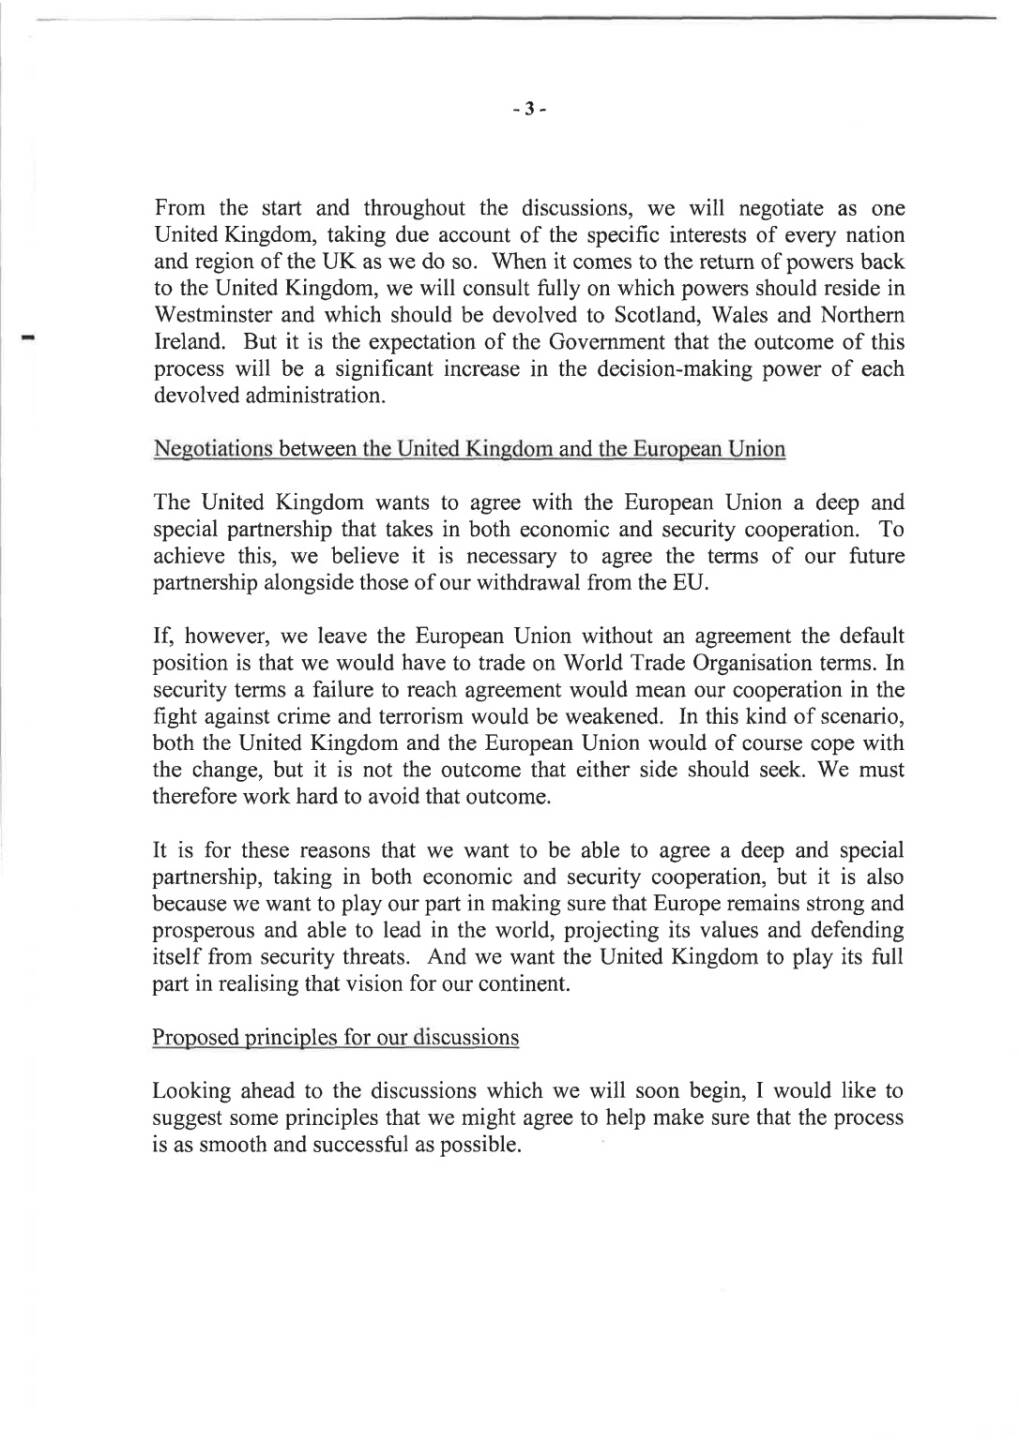 Das Brexit-Dokument mit Tusk, Seite 3/6, komplettes Dokument unter http://boerse-social.com/static/uploads/file_2185_das_brexit-dokument_mit_tusk.pdf